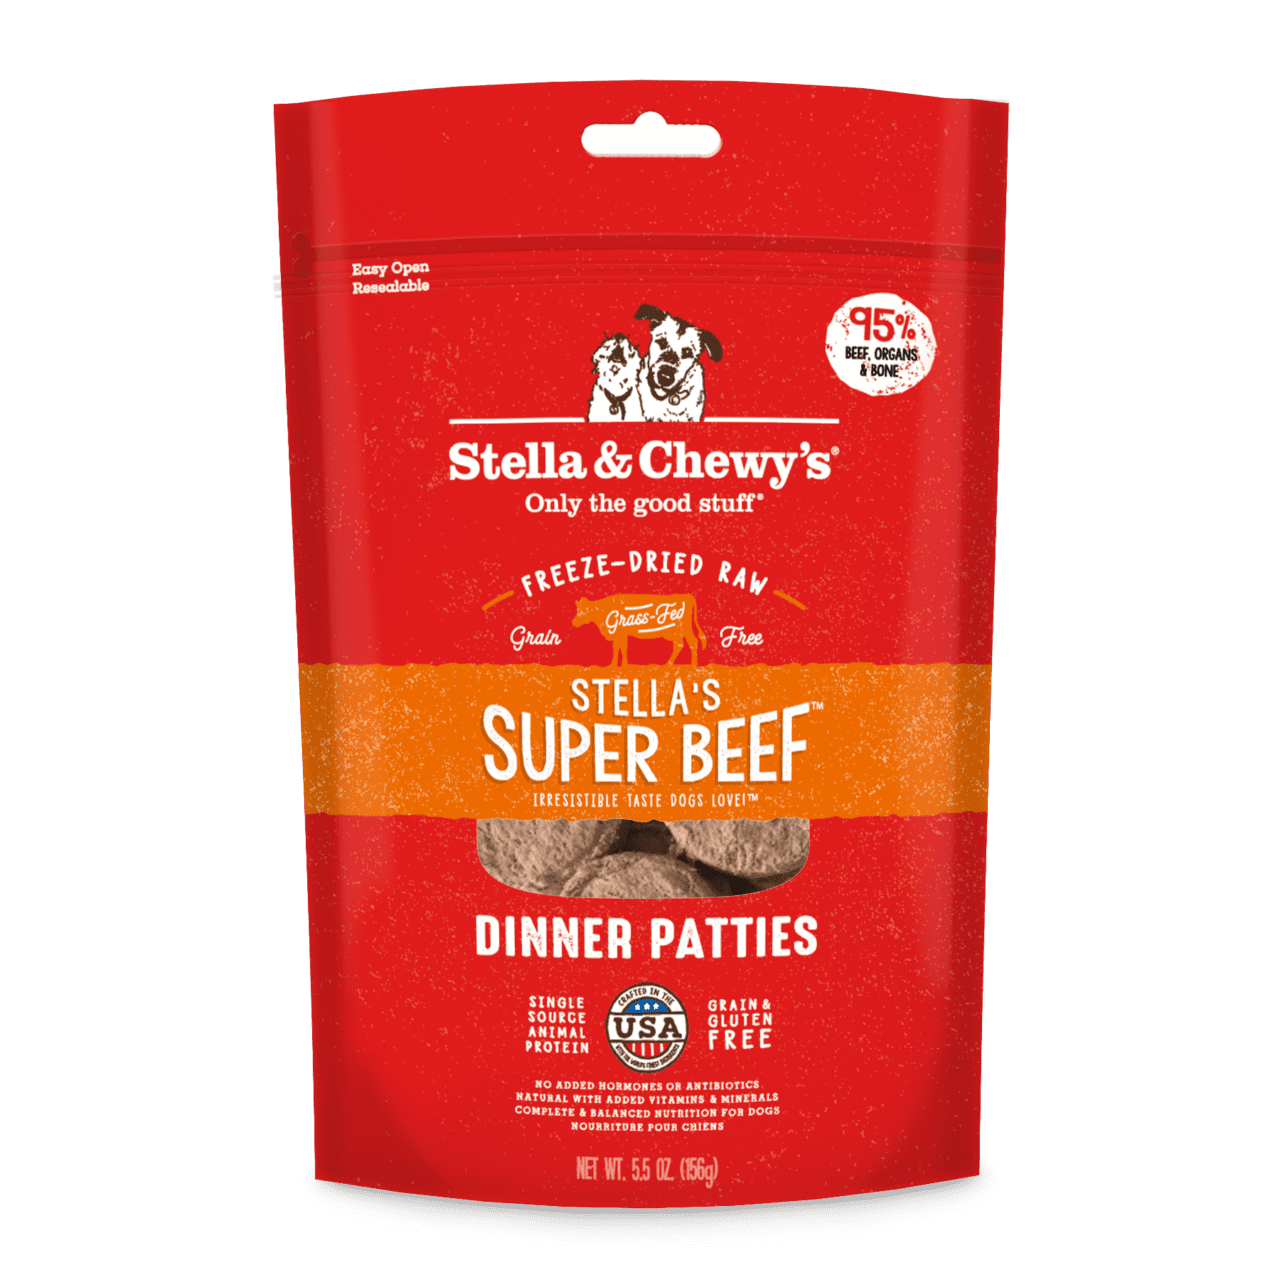 Stella’s Super Beef Freeze-Dried Raw Dinner Patties front